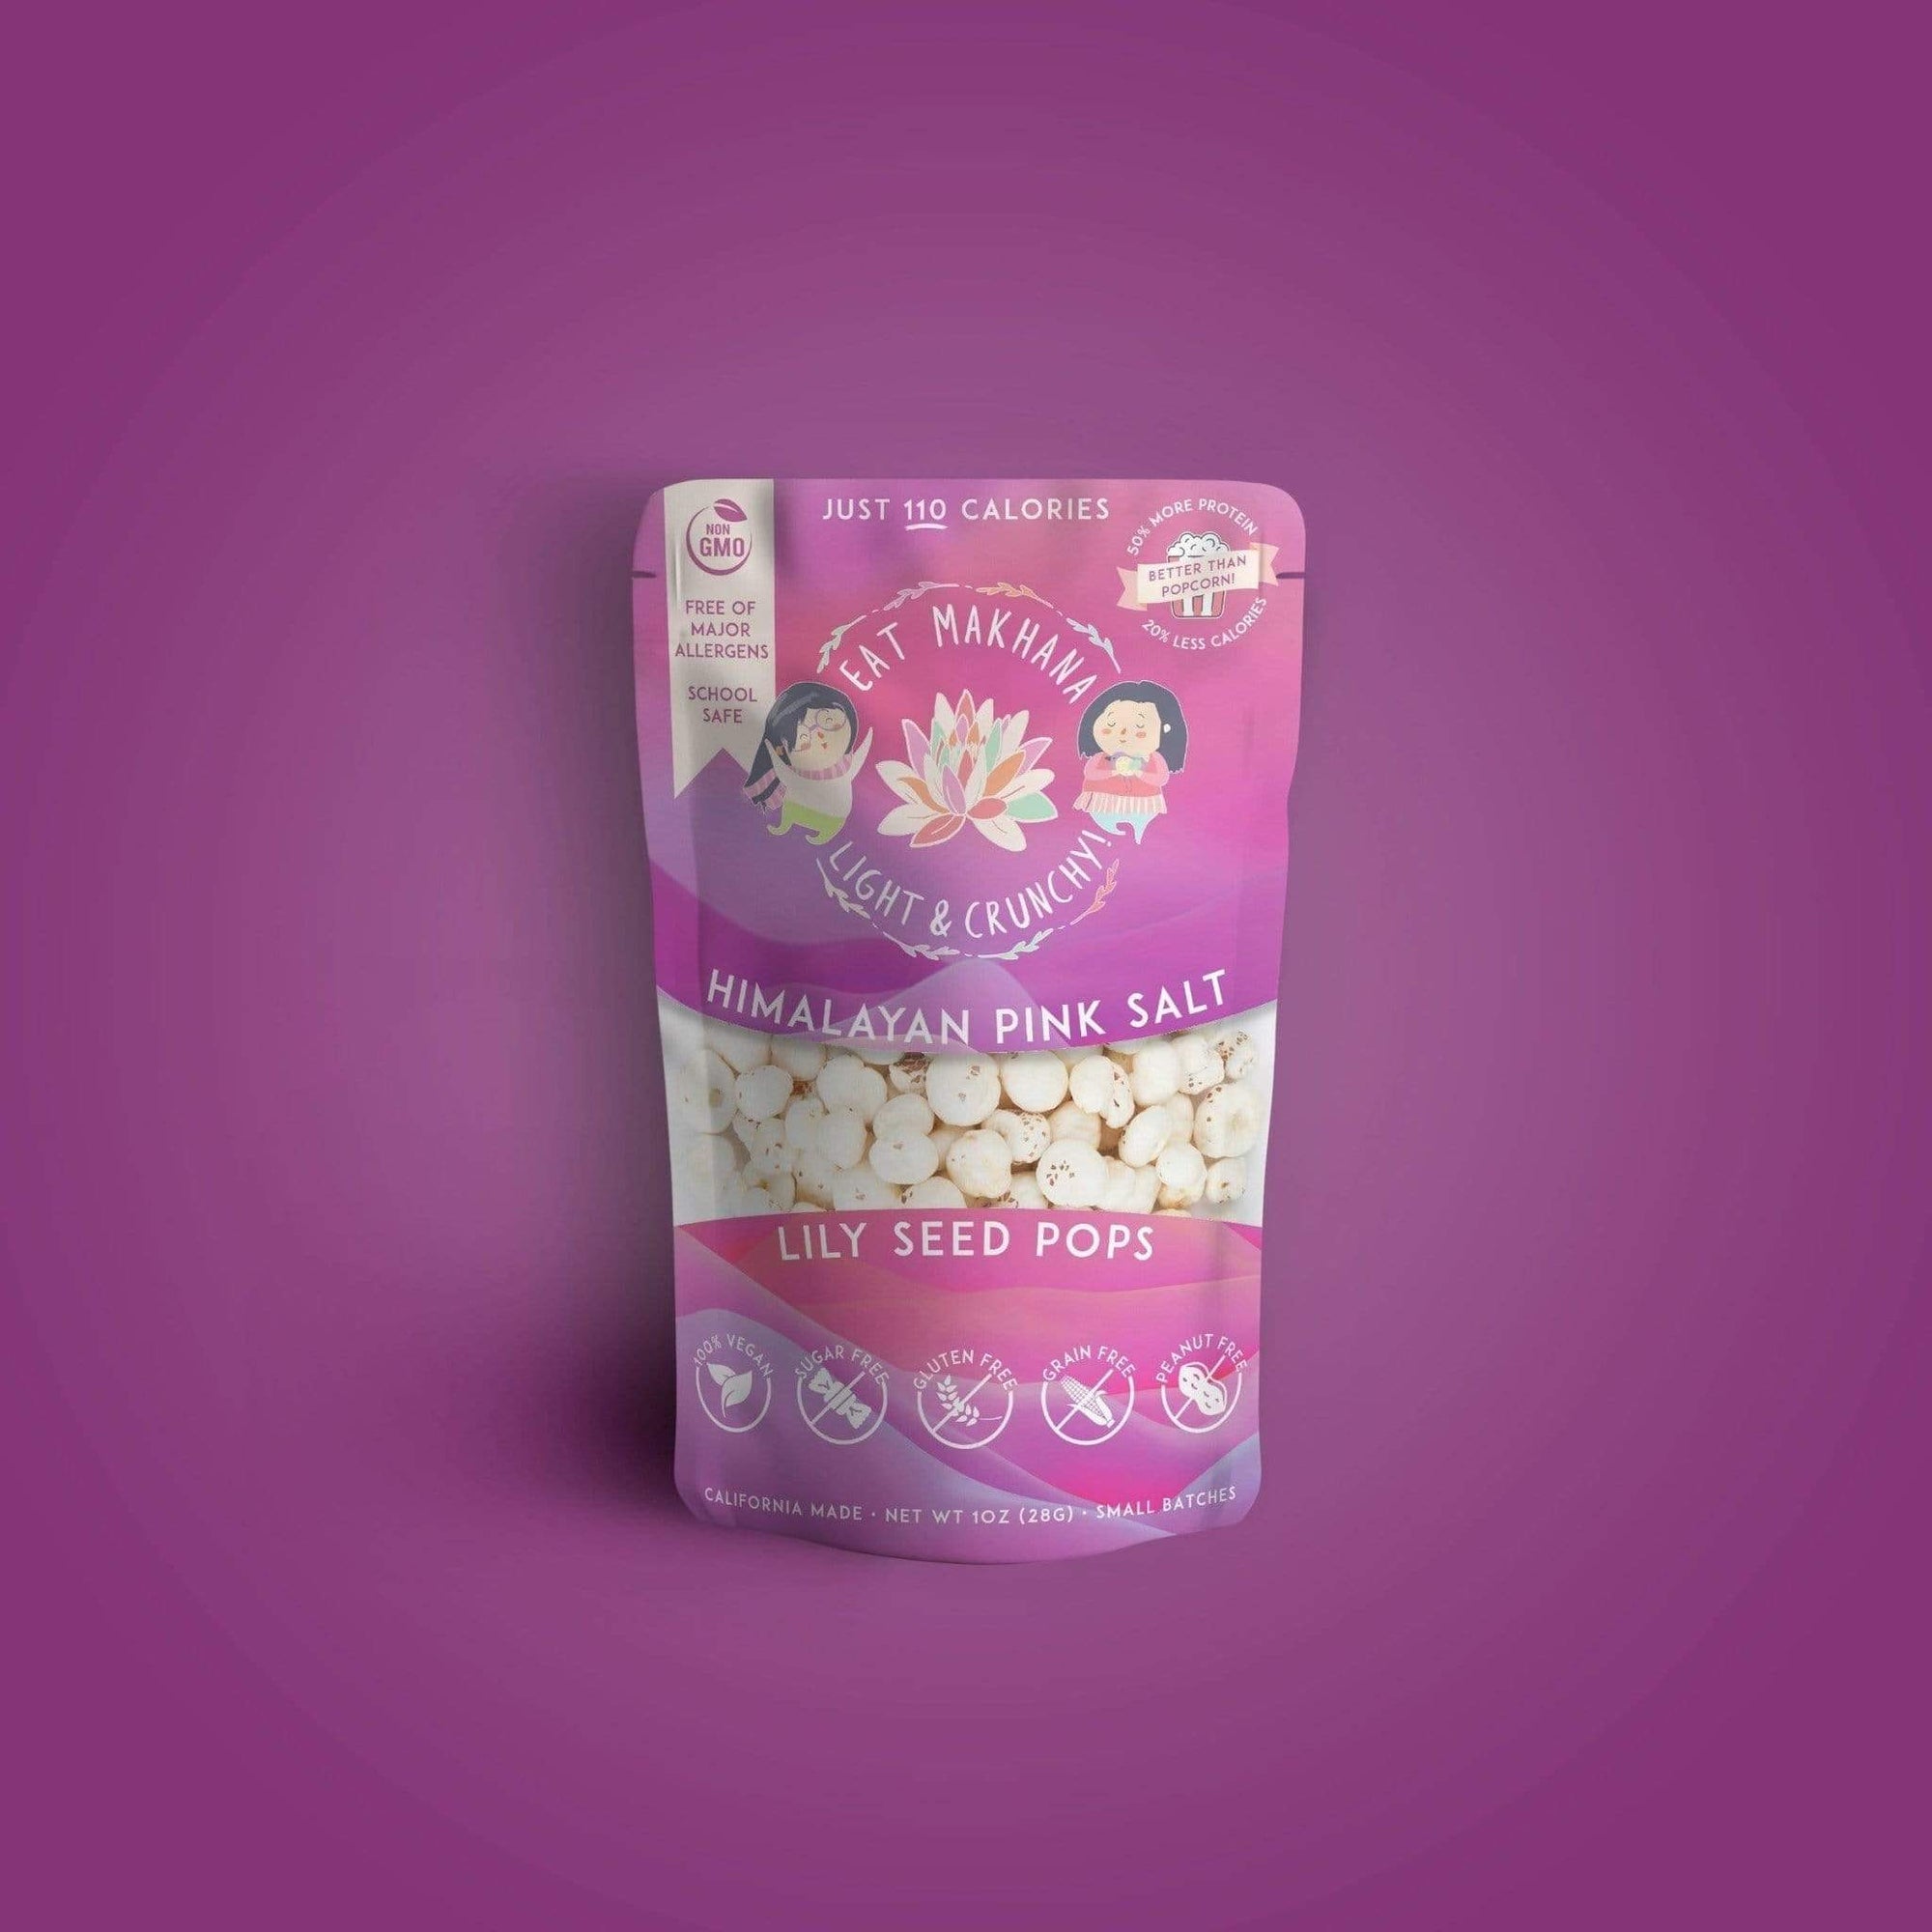 [Eat Makhana] Himayalan Pink Salt Water Lily Seed Pops | 1oz exclusive